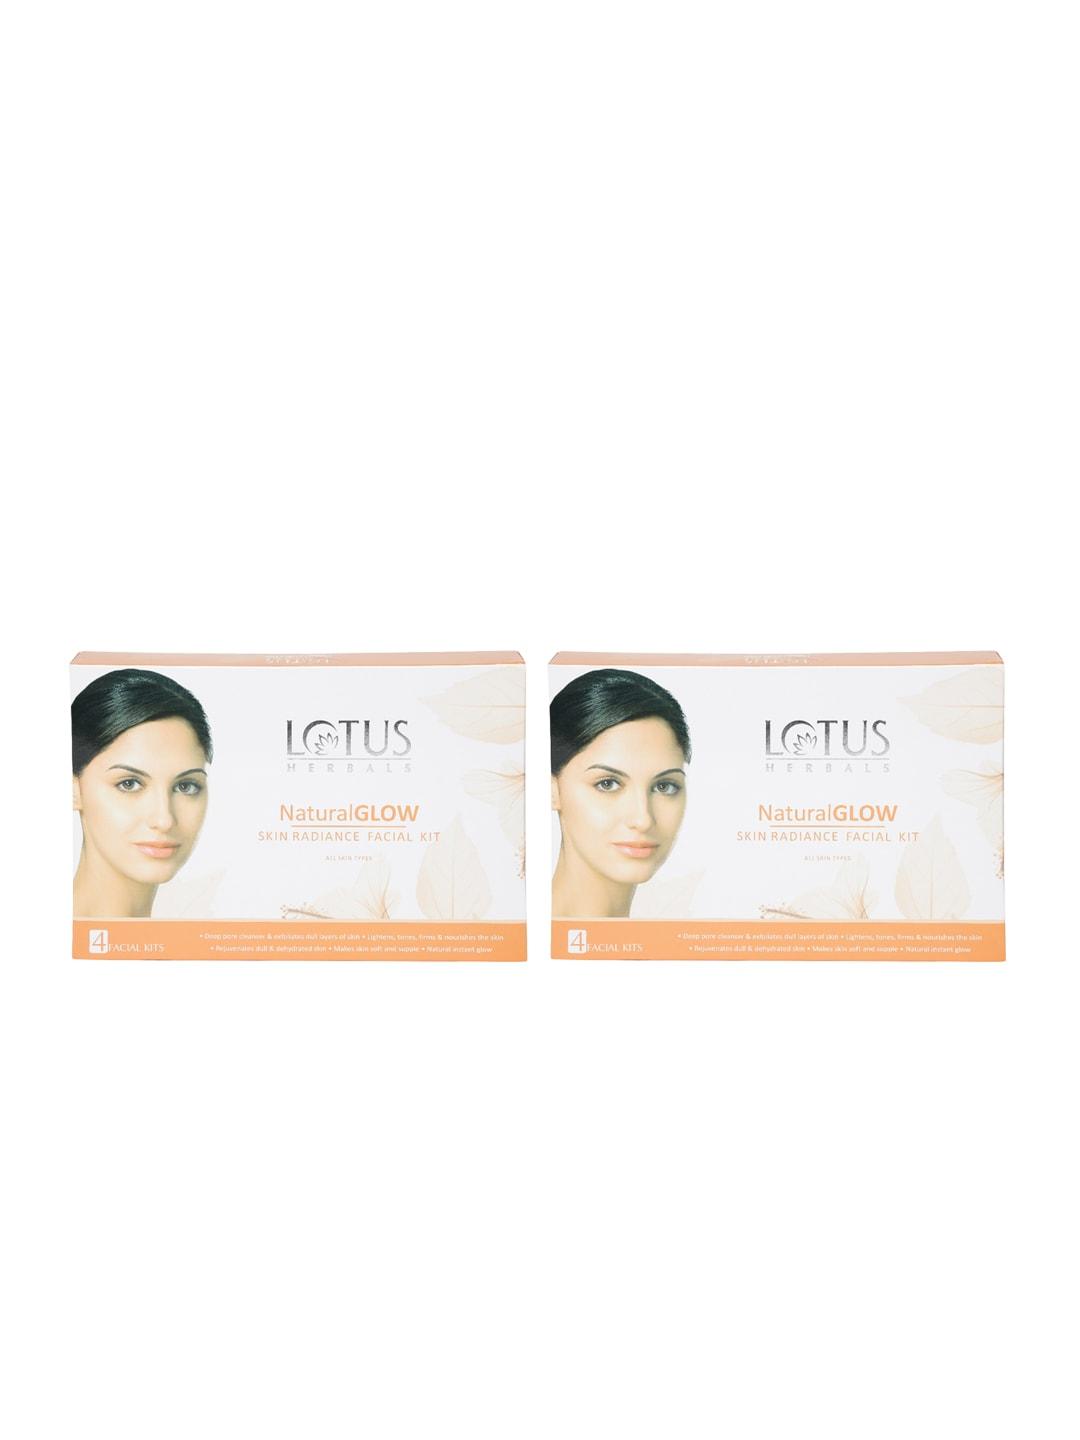 Lotus Herbals Set Of 2 NaturalGLOW Skin Radiance Facial Kits - 4 Kits Each